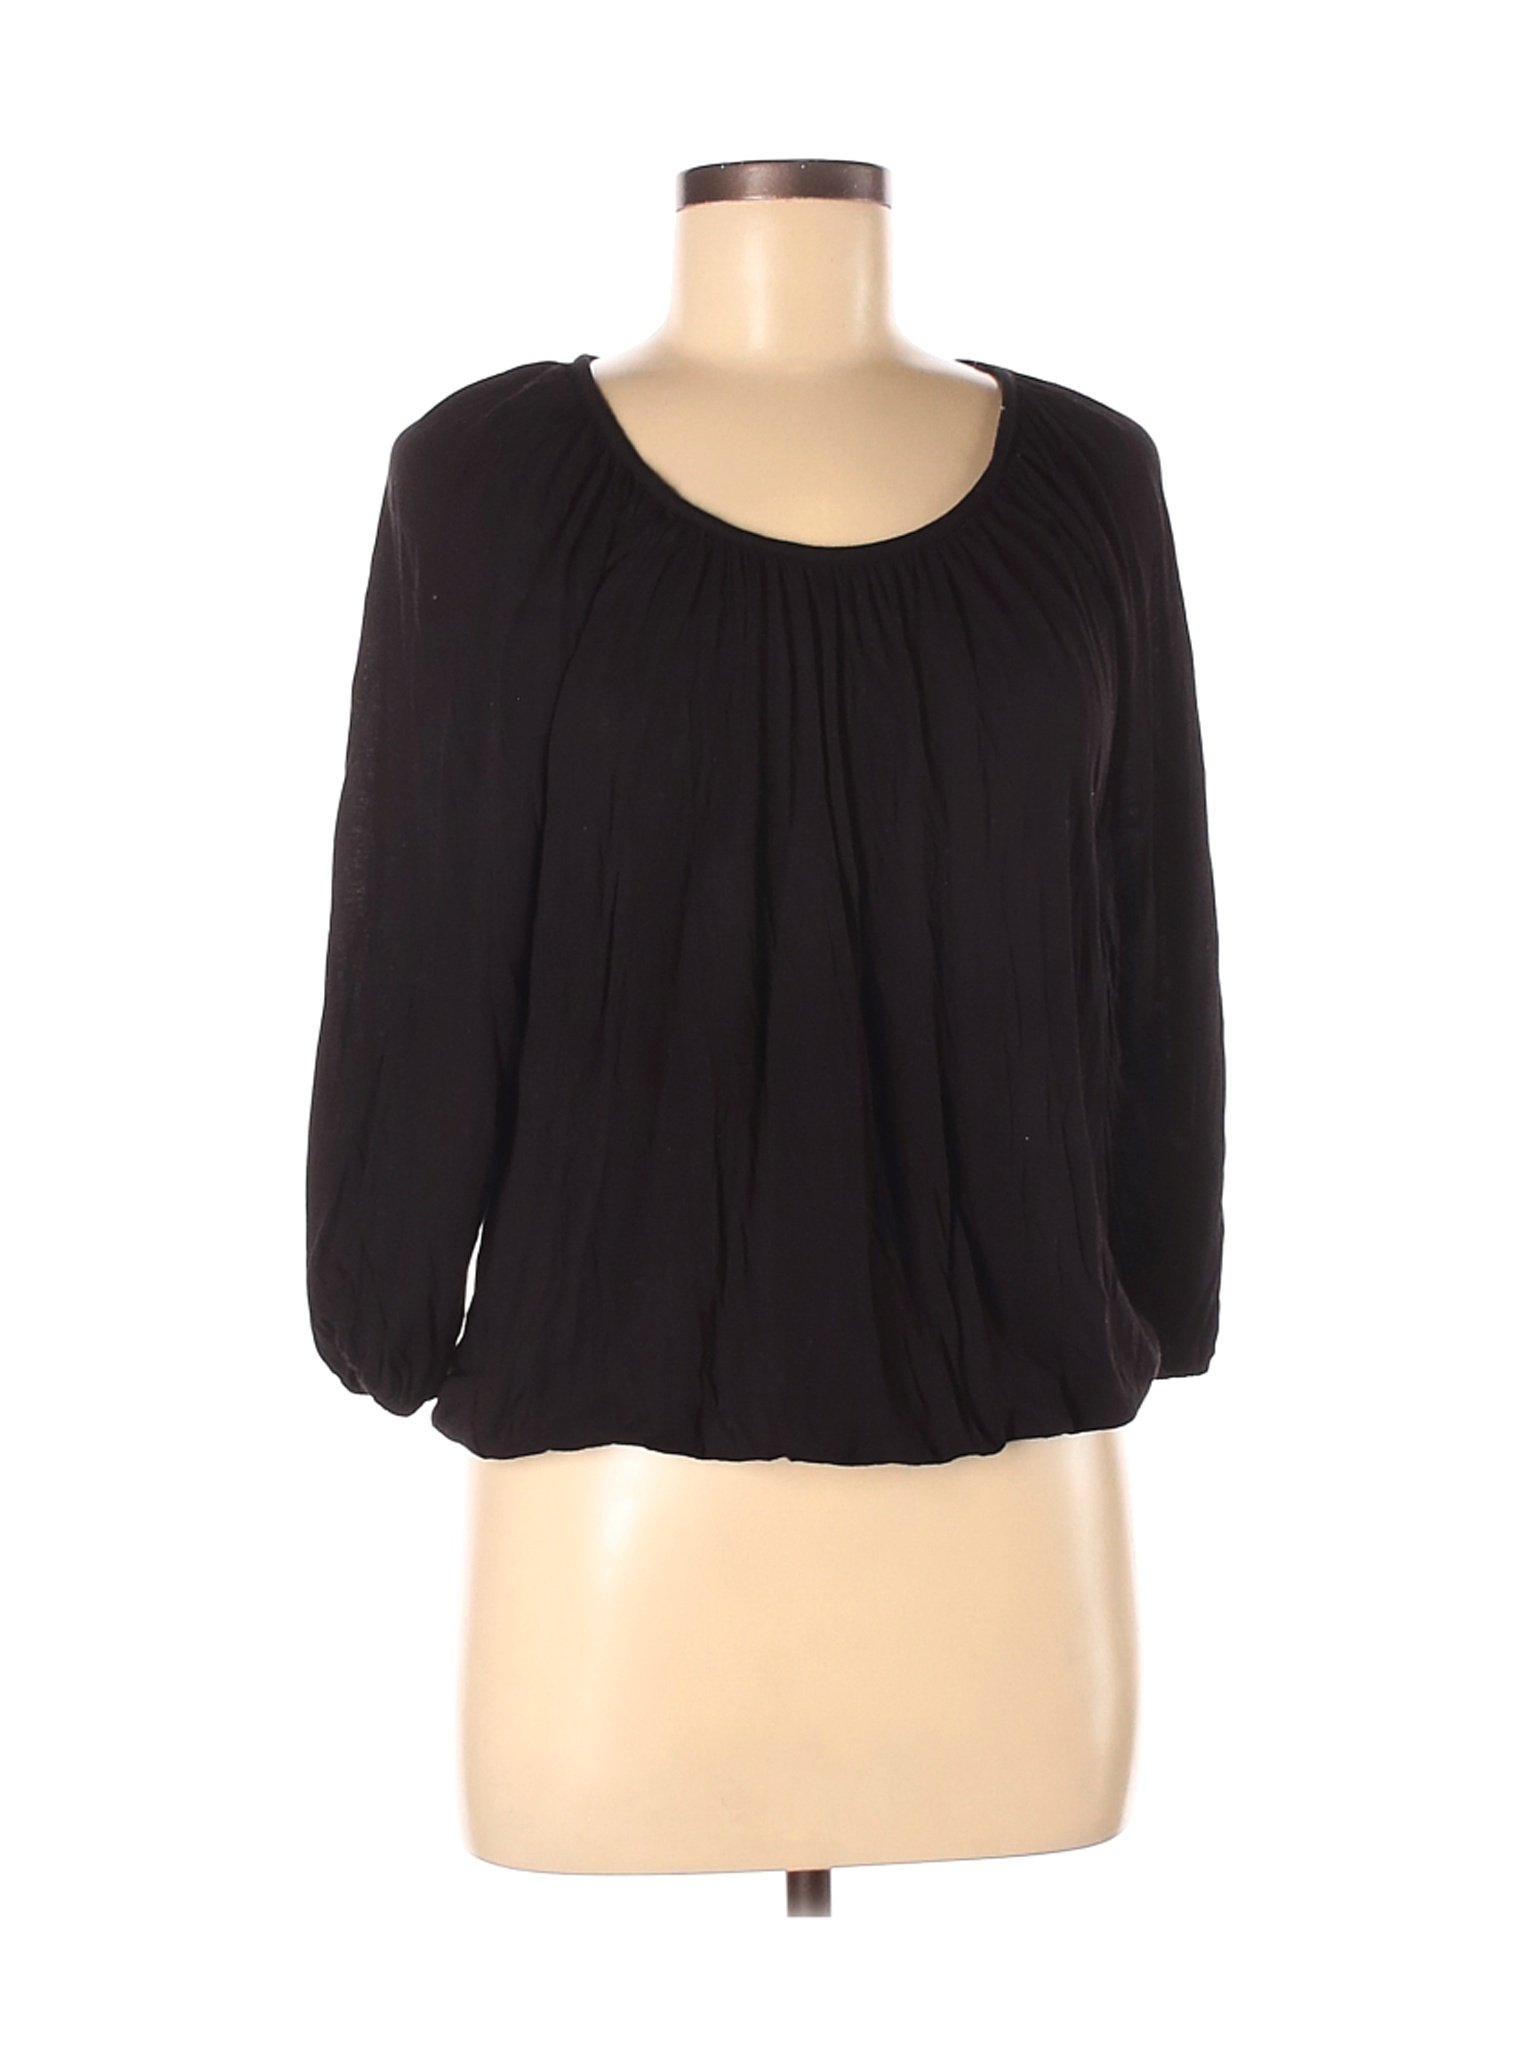 MICHAEL Michael Kors Women Black Long Sleeve Top M Petites | eBay